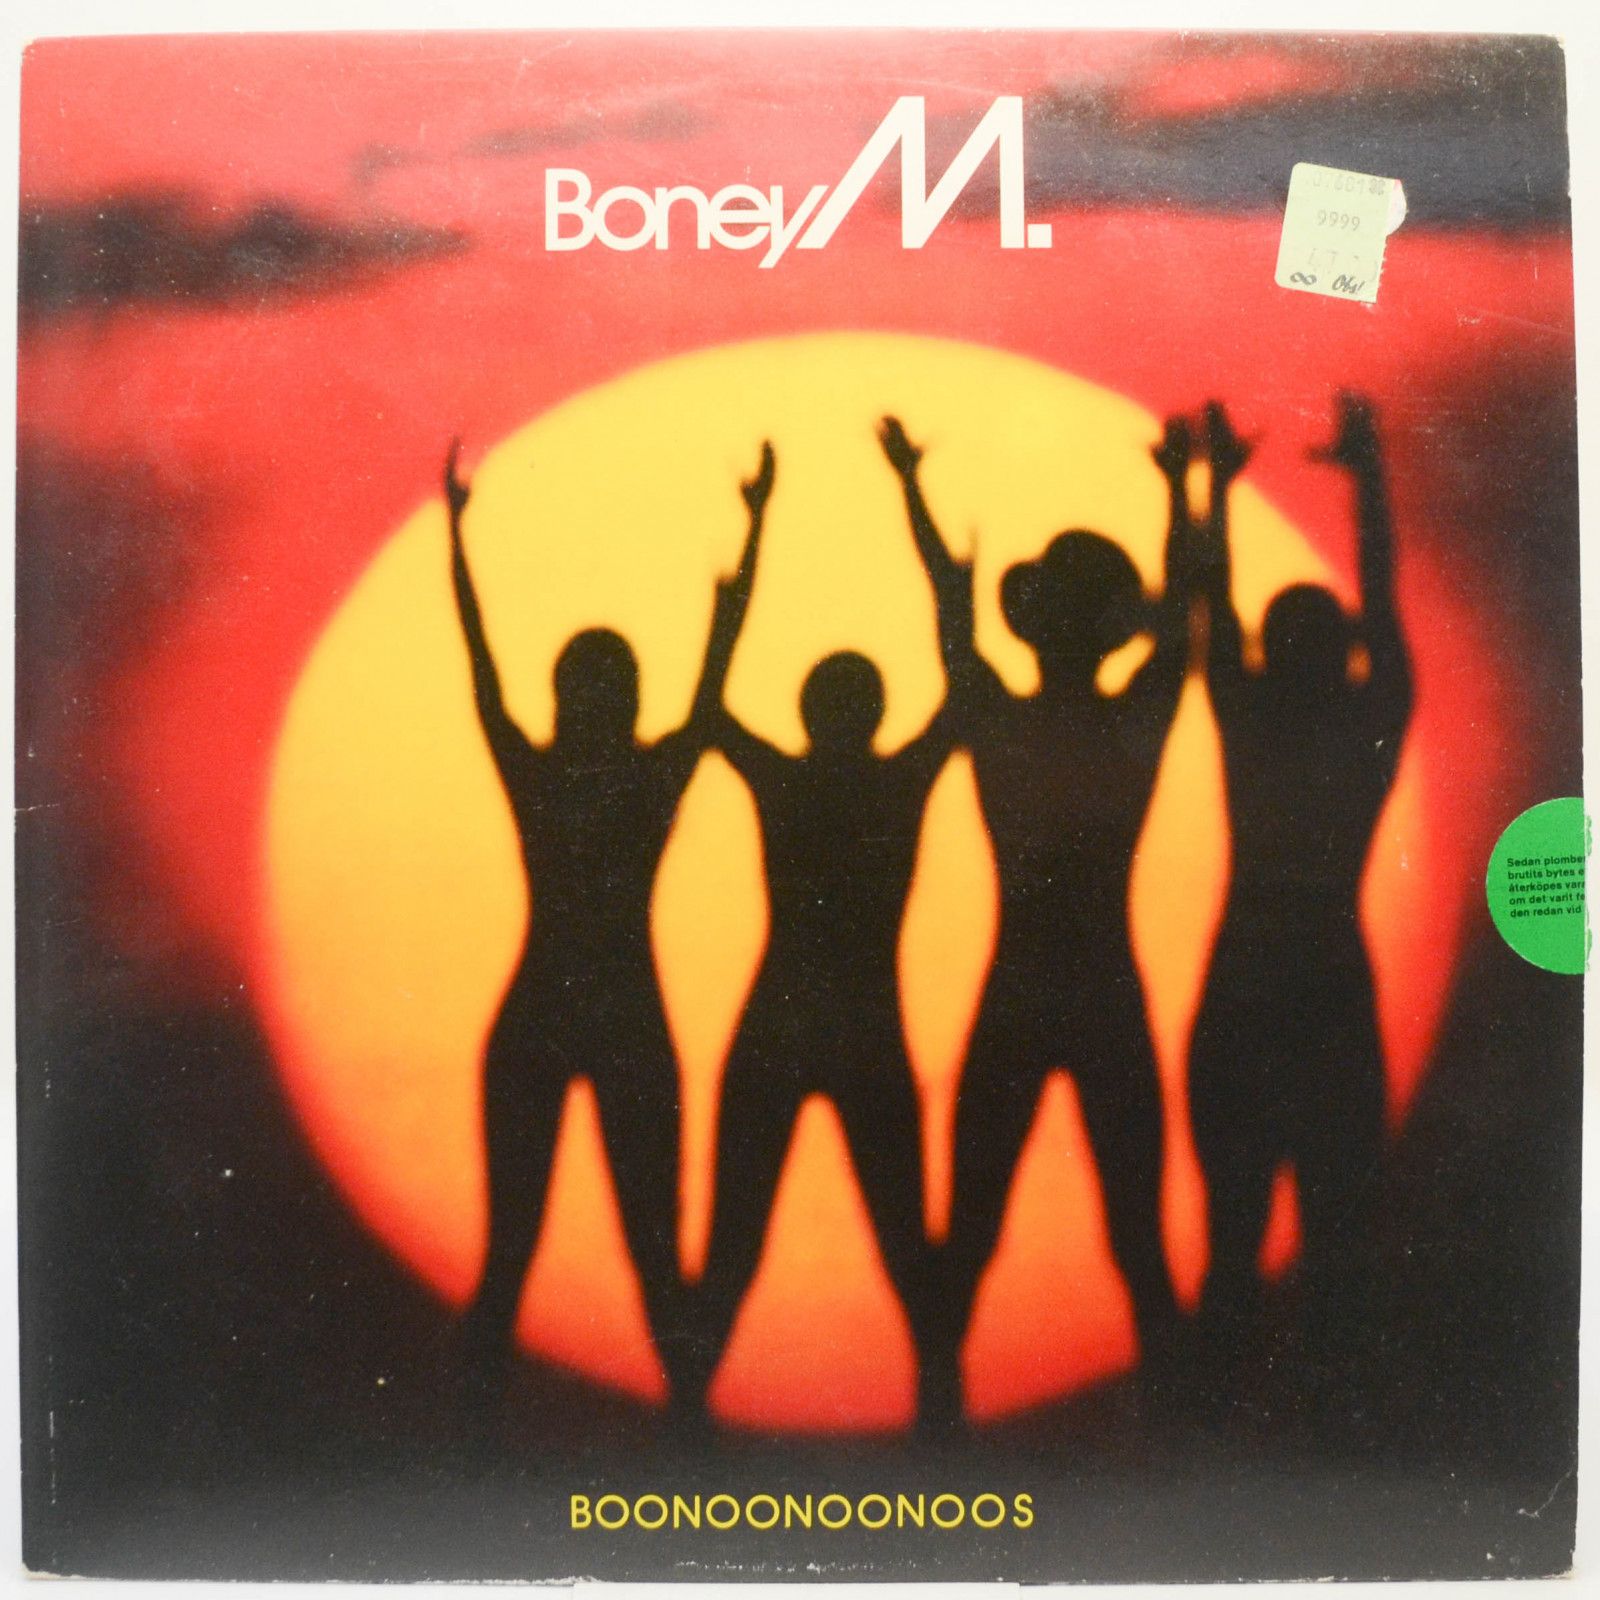 Boney M. — Boonoonoonoos (poster), 1981